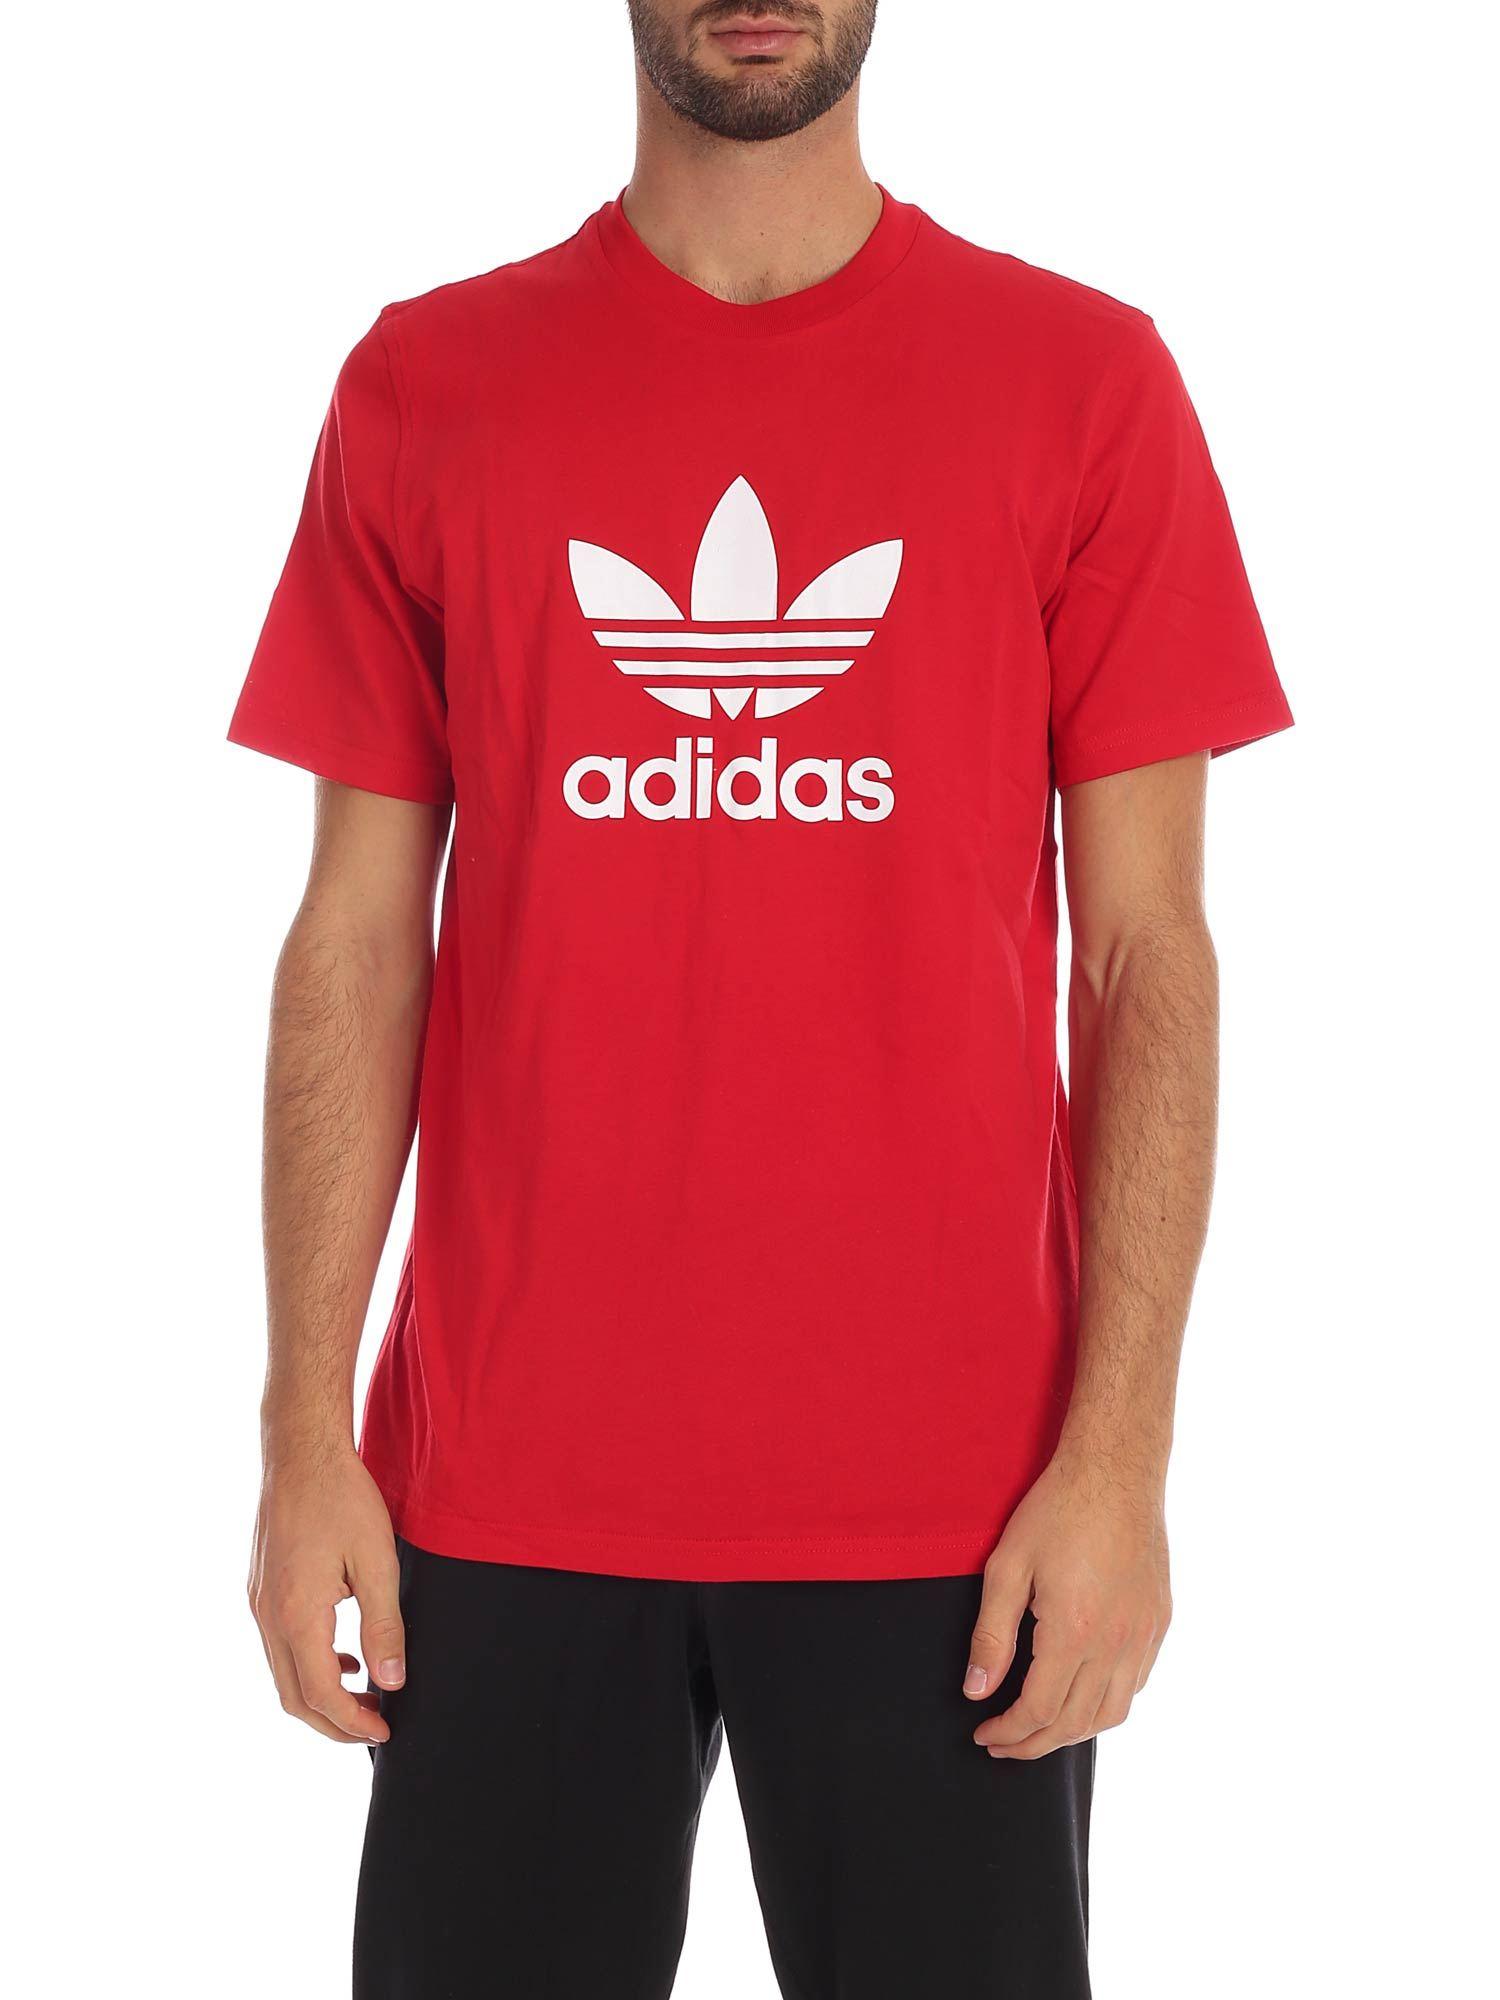 adidas Originals Cotton Trefoil T-shirt in Red for Men - Lyst